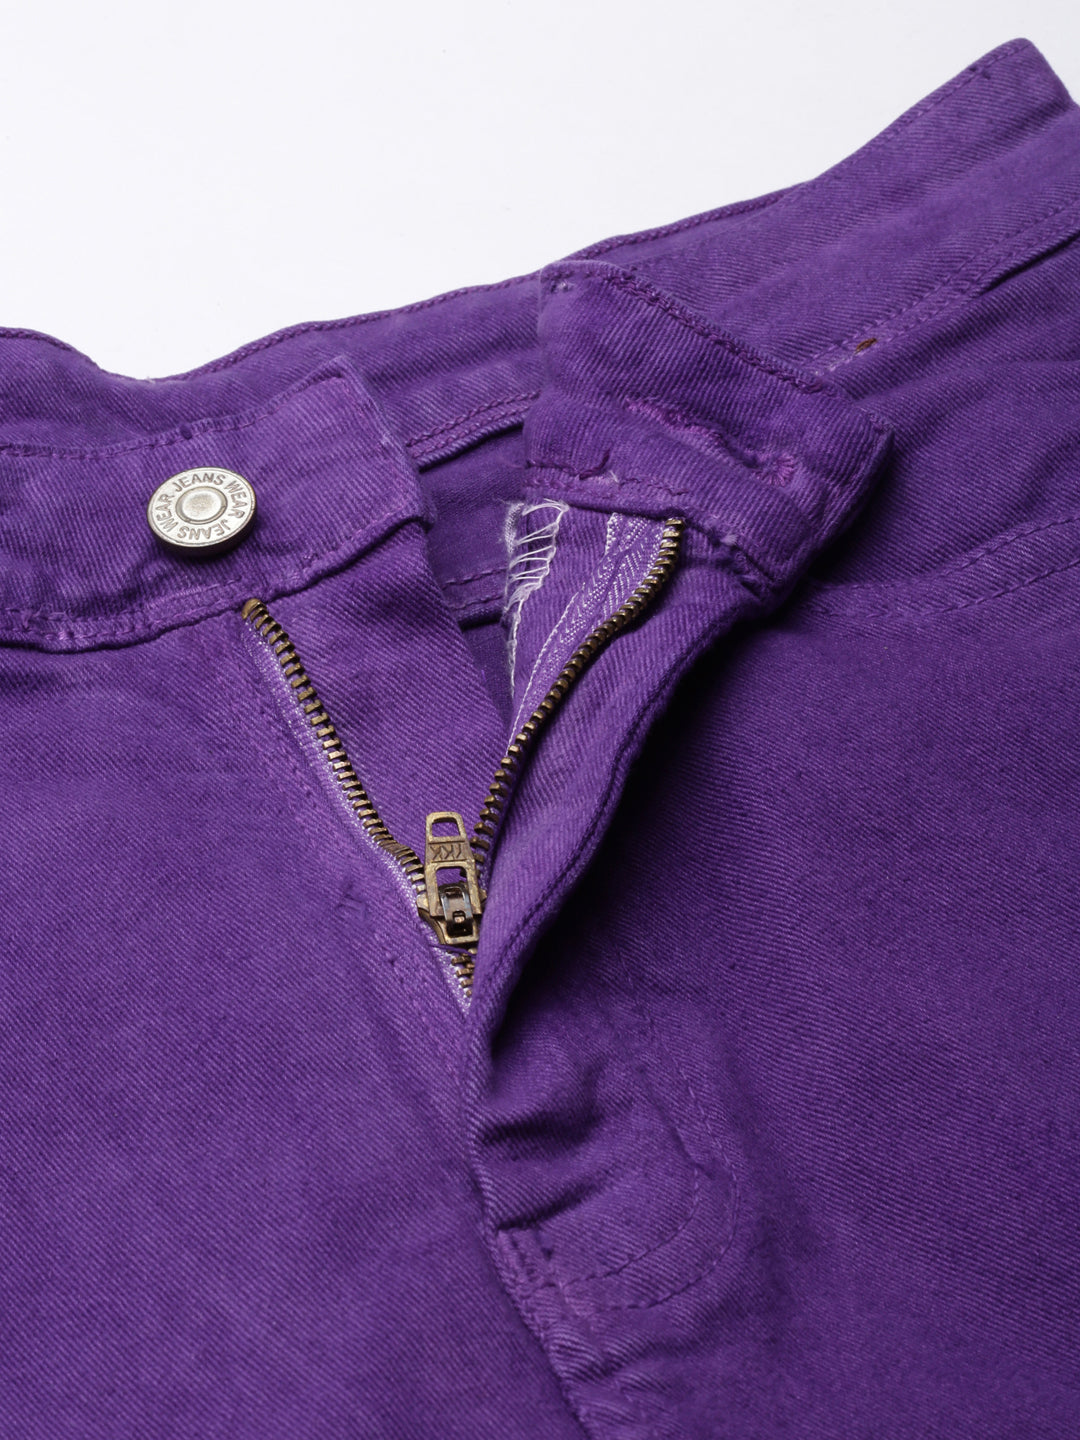 Women Purple Solid Straight Fit Denim Jeans